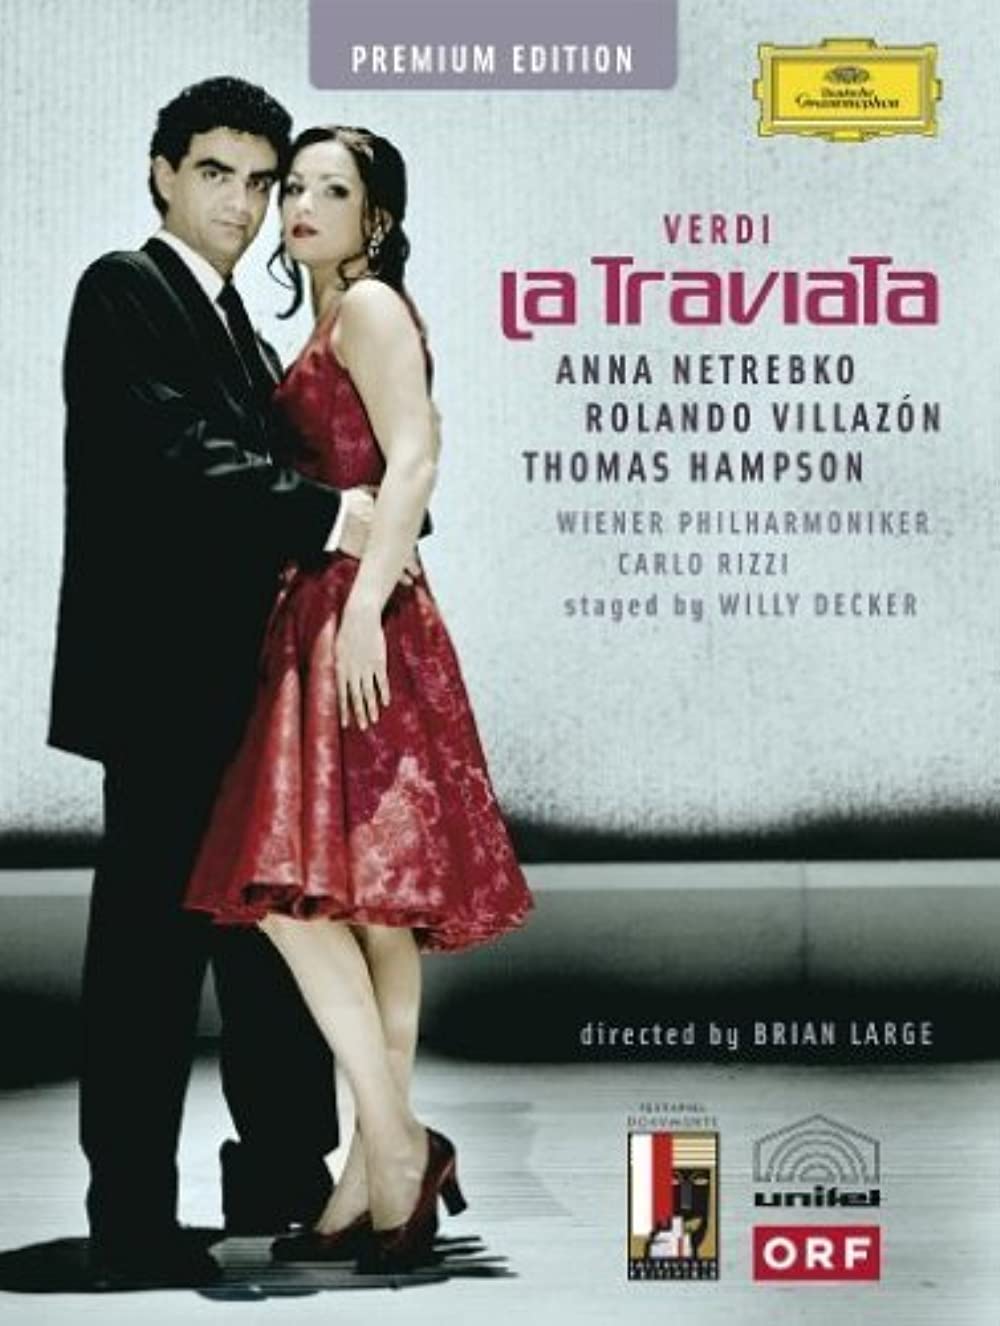 Filmbeschreibung zu La Traviata (2005)